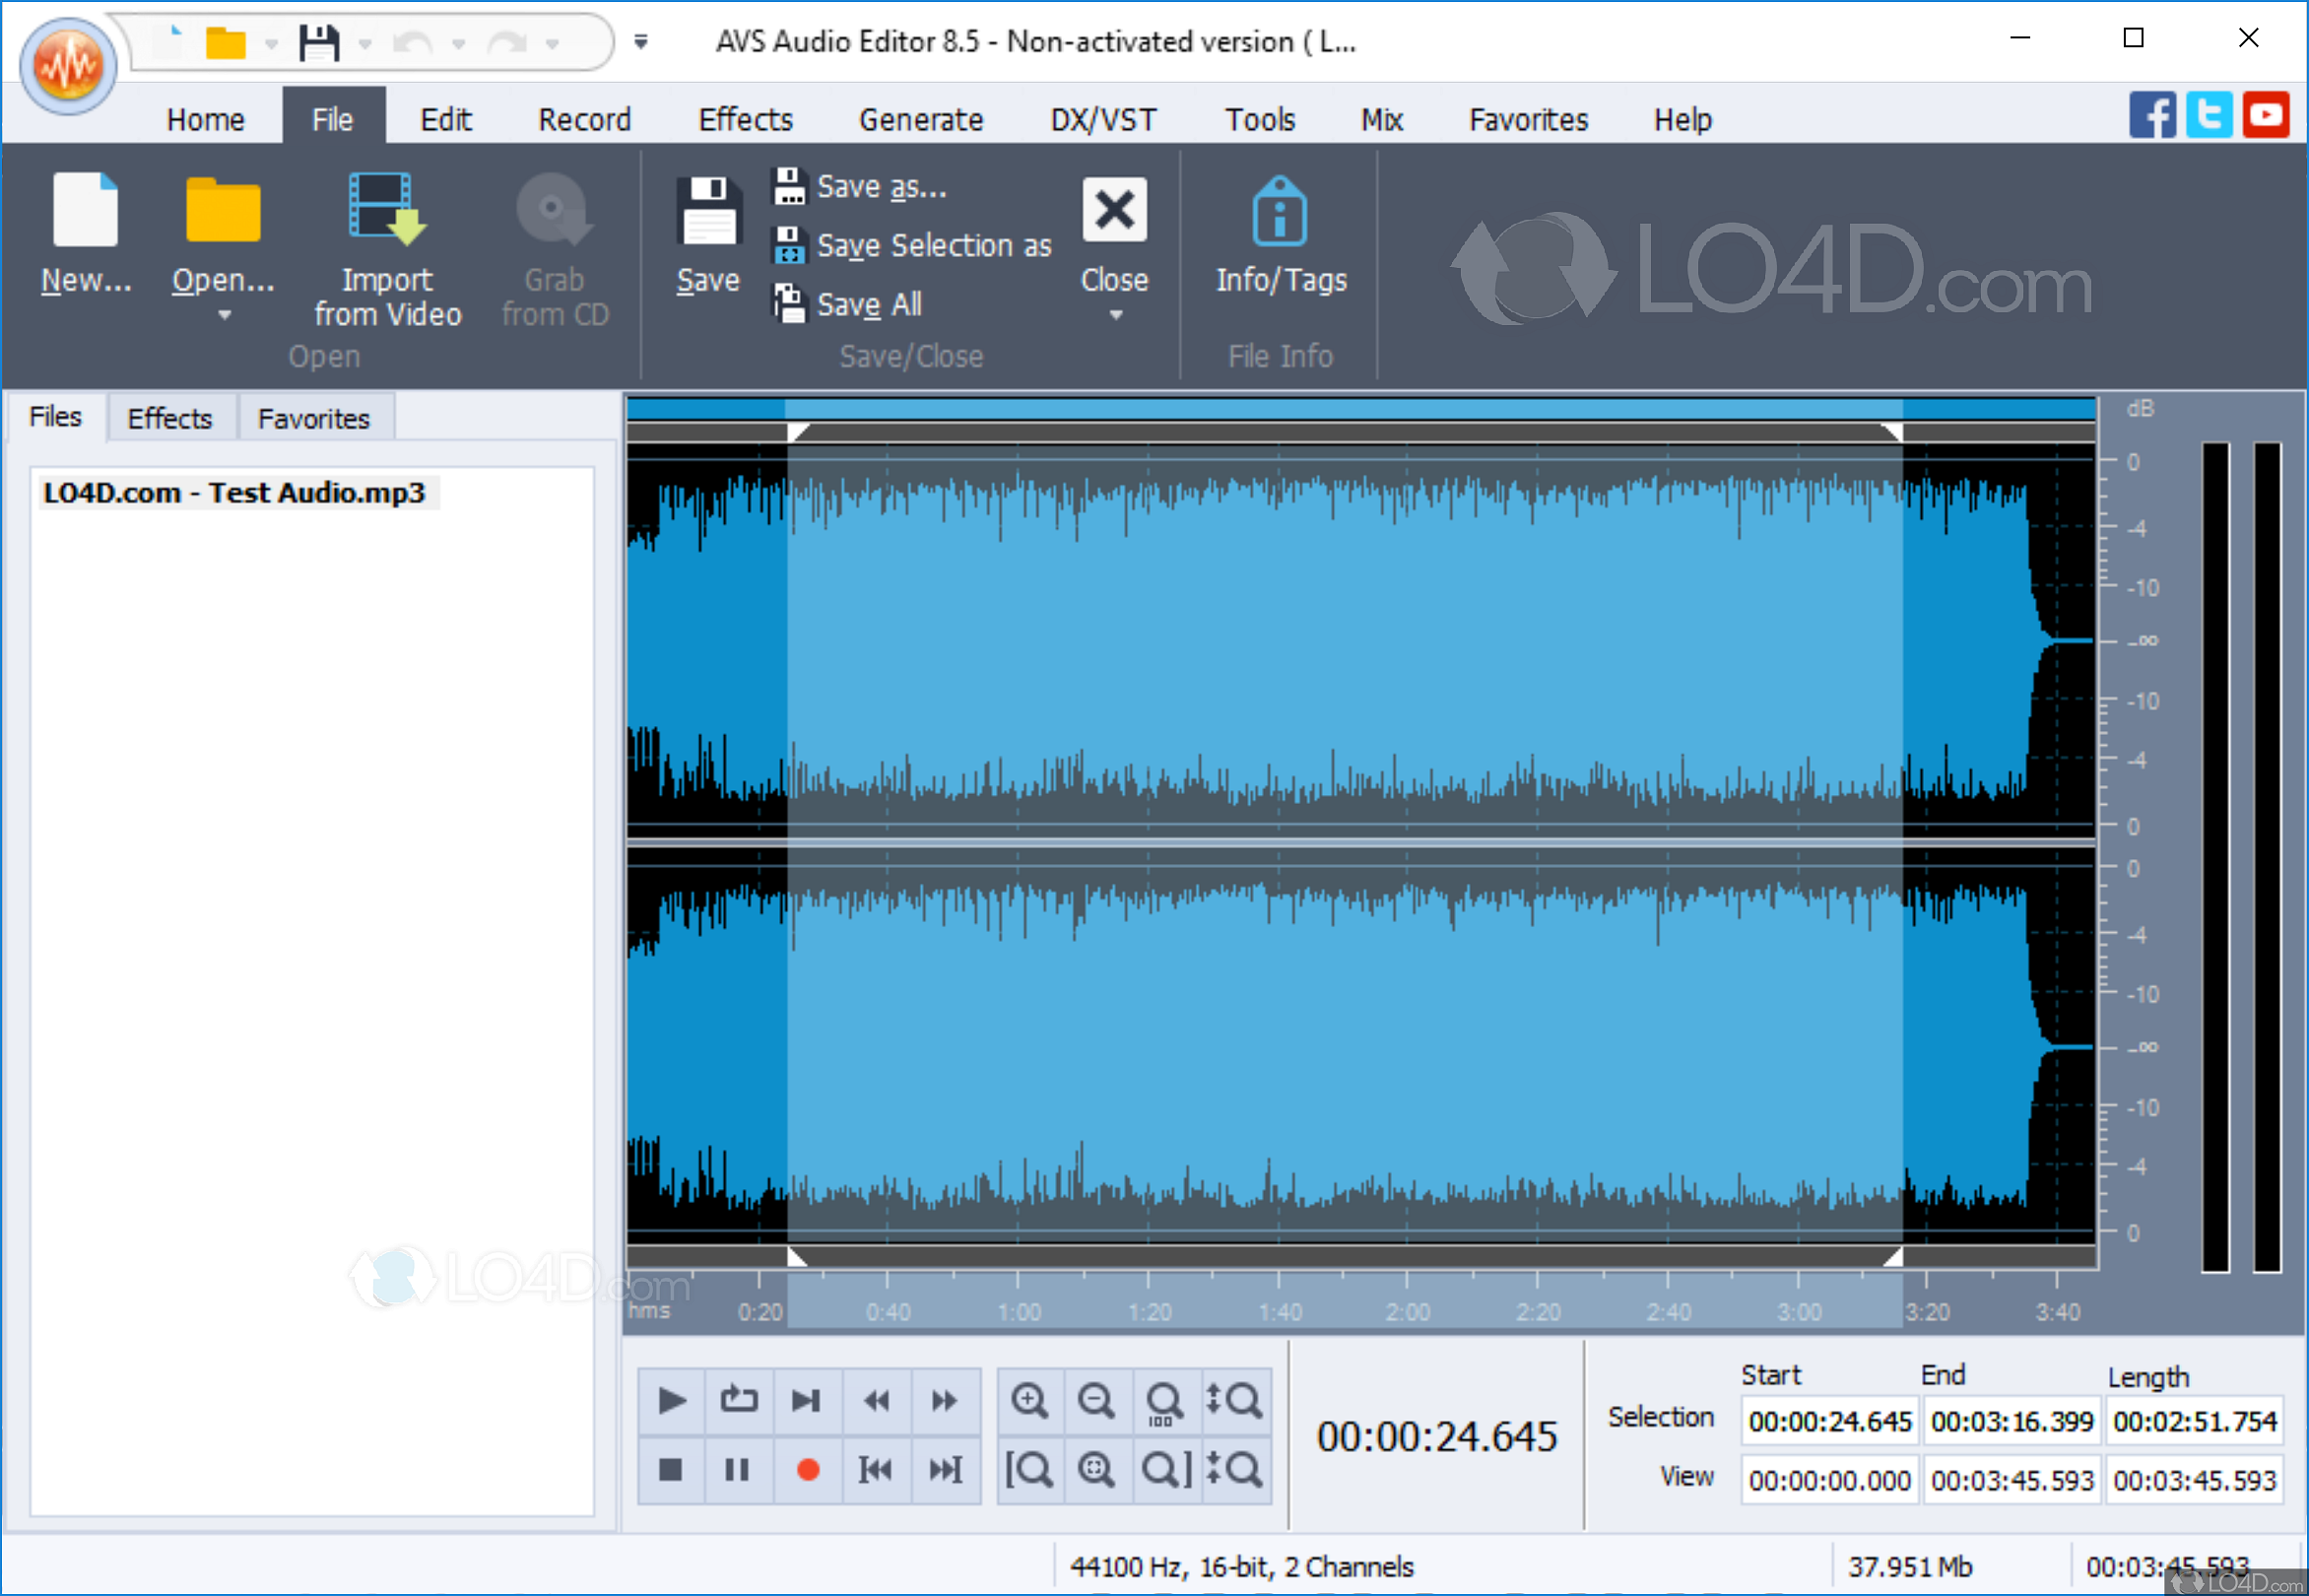 instal the new for windows AVS Audio Editor 10.4.2.571